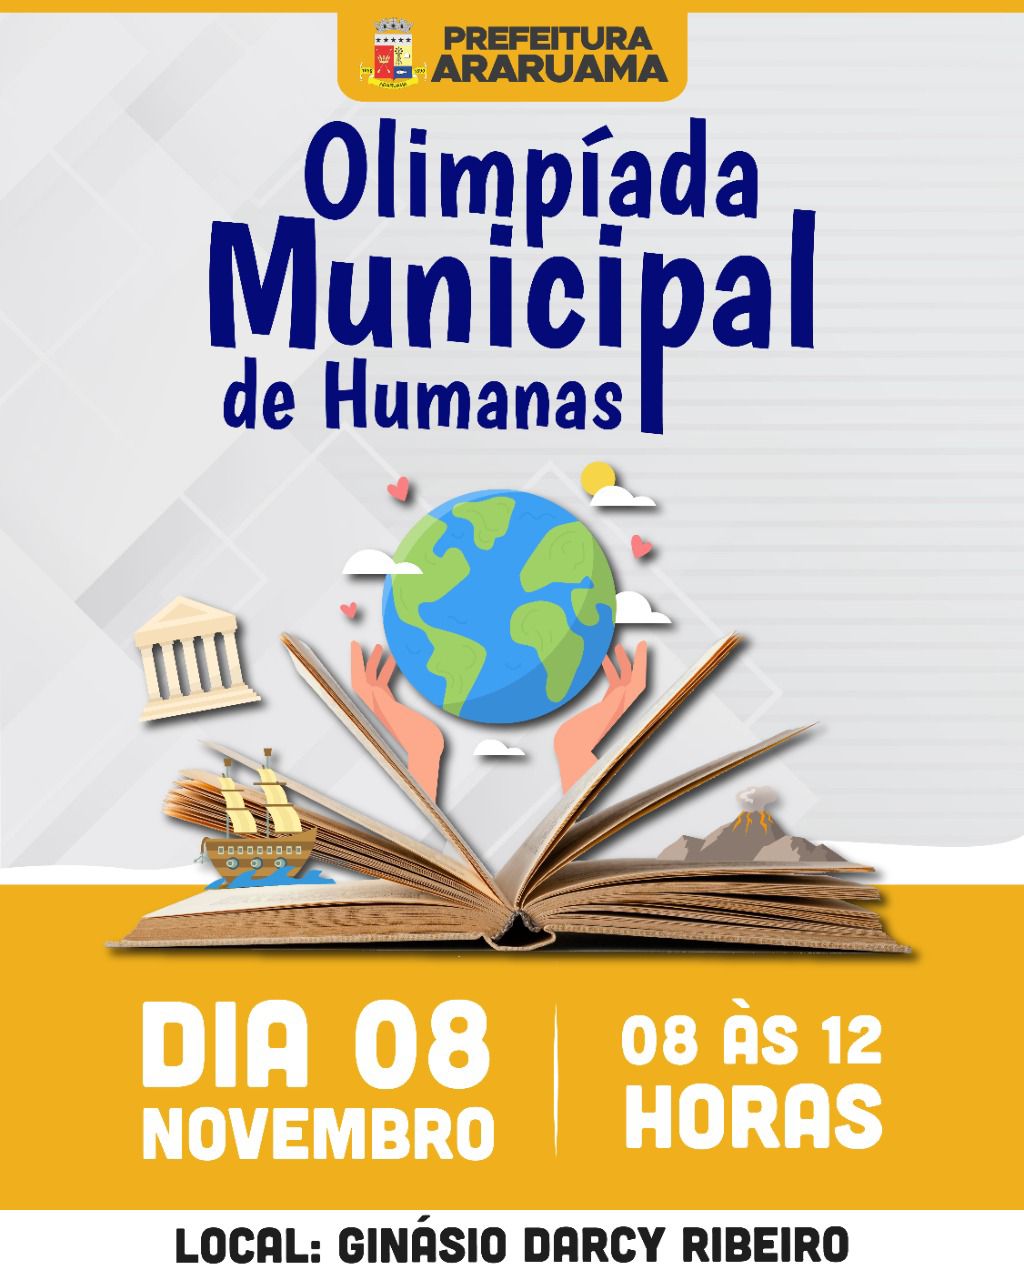 Prefeitura de Araruama vai realizar a “Olimpíada Municipal de Humanas”